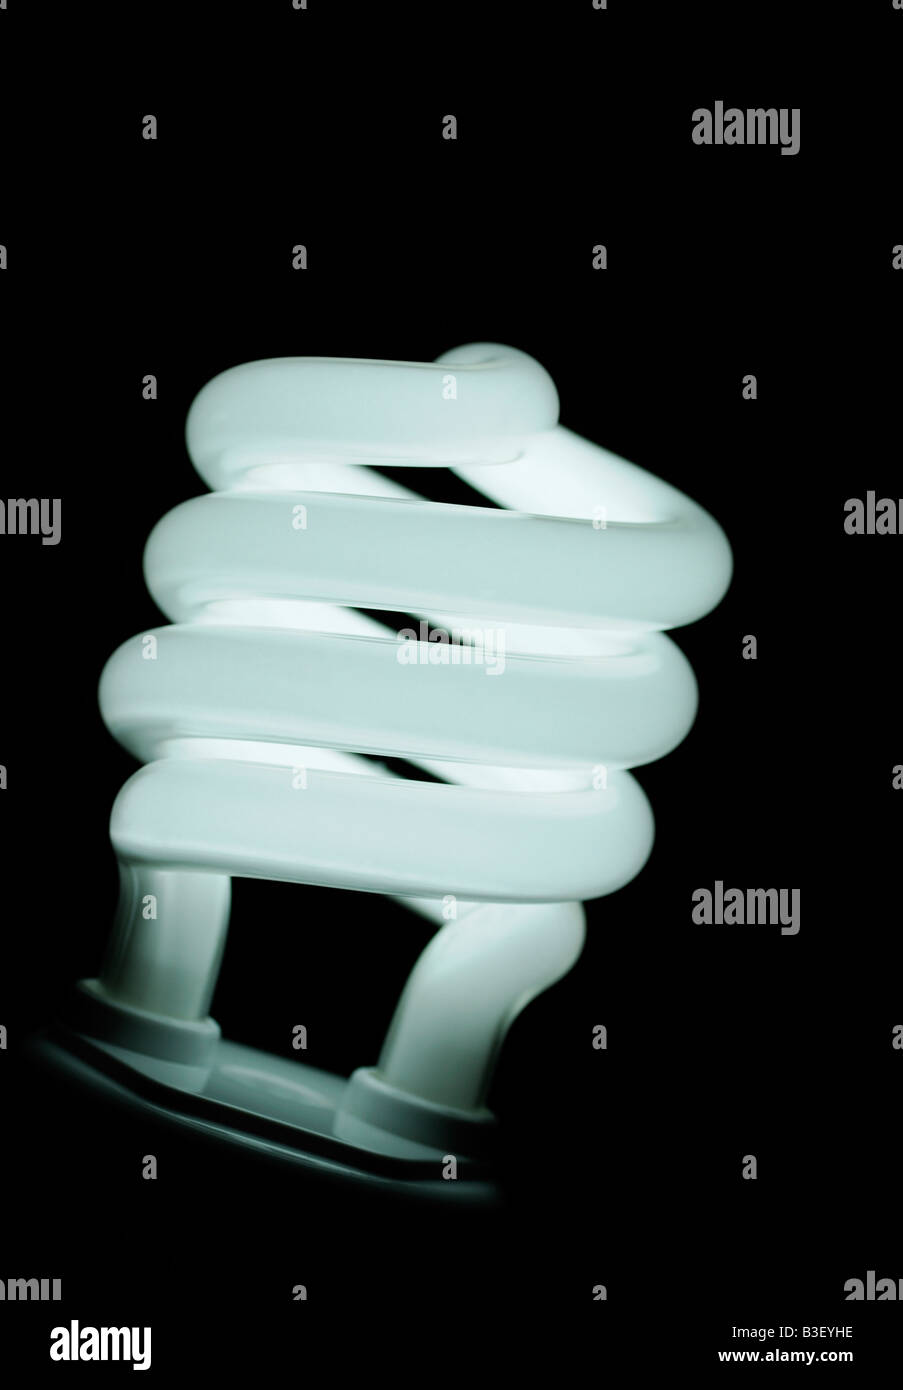 Energy Saving Compact Fluorescent Lightbulb Close Up an Environmentally Friendly Alternative to Traditional Light Bulbs Stock Photo